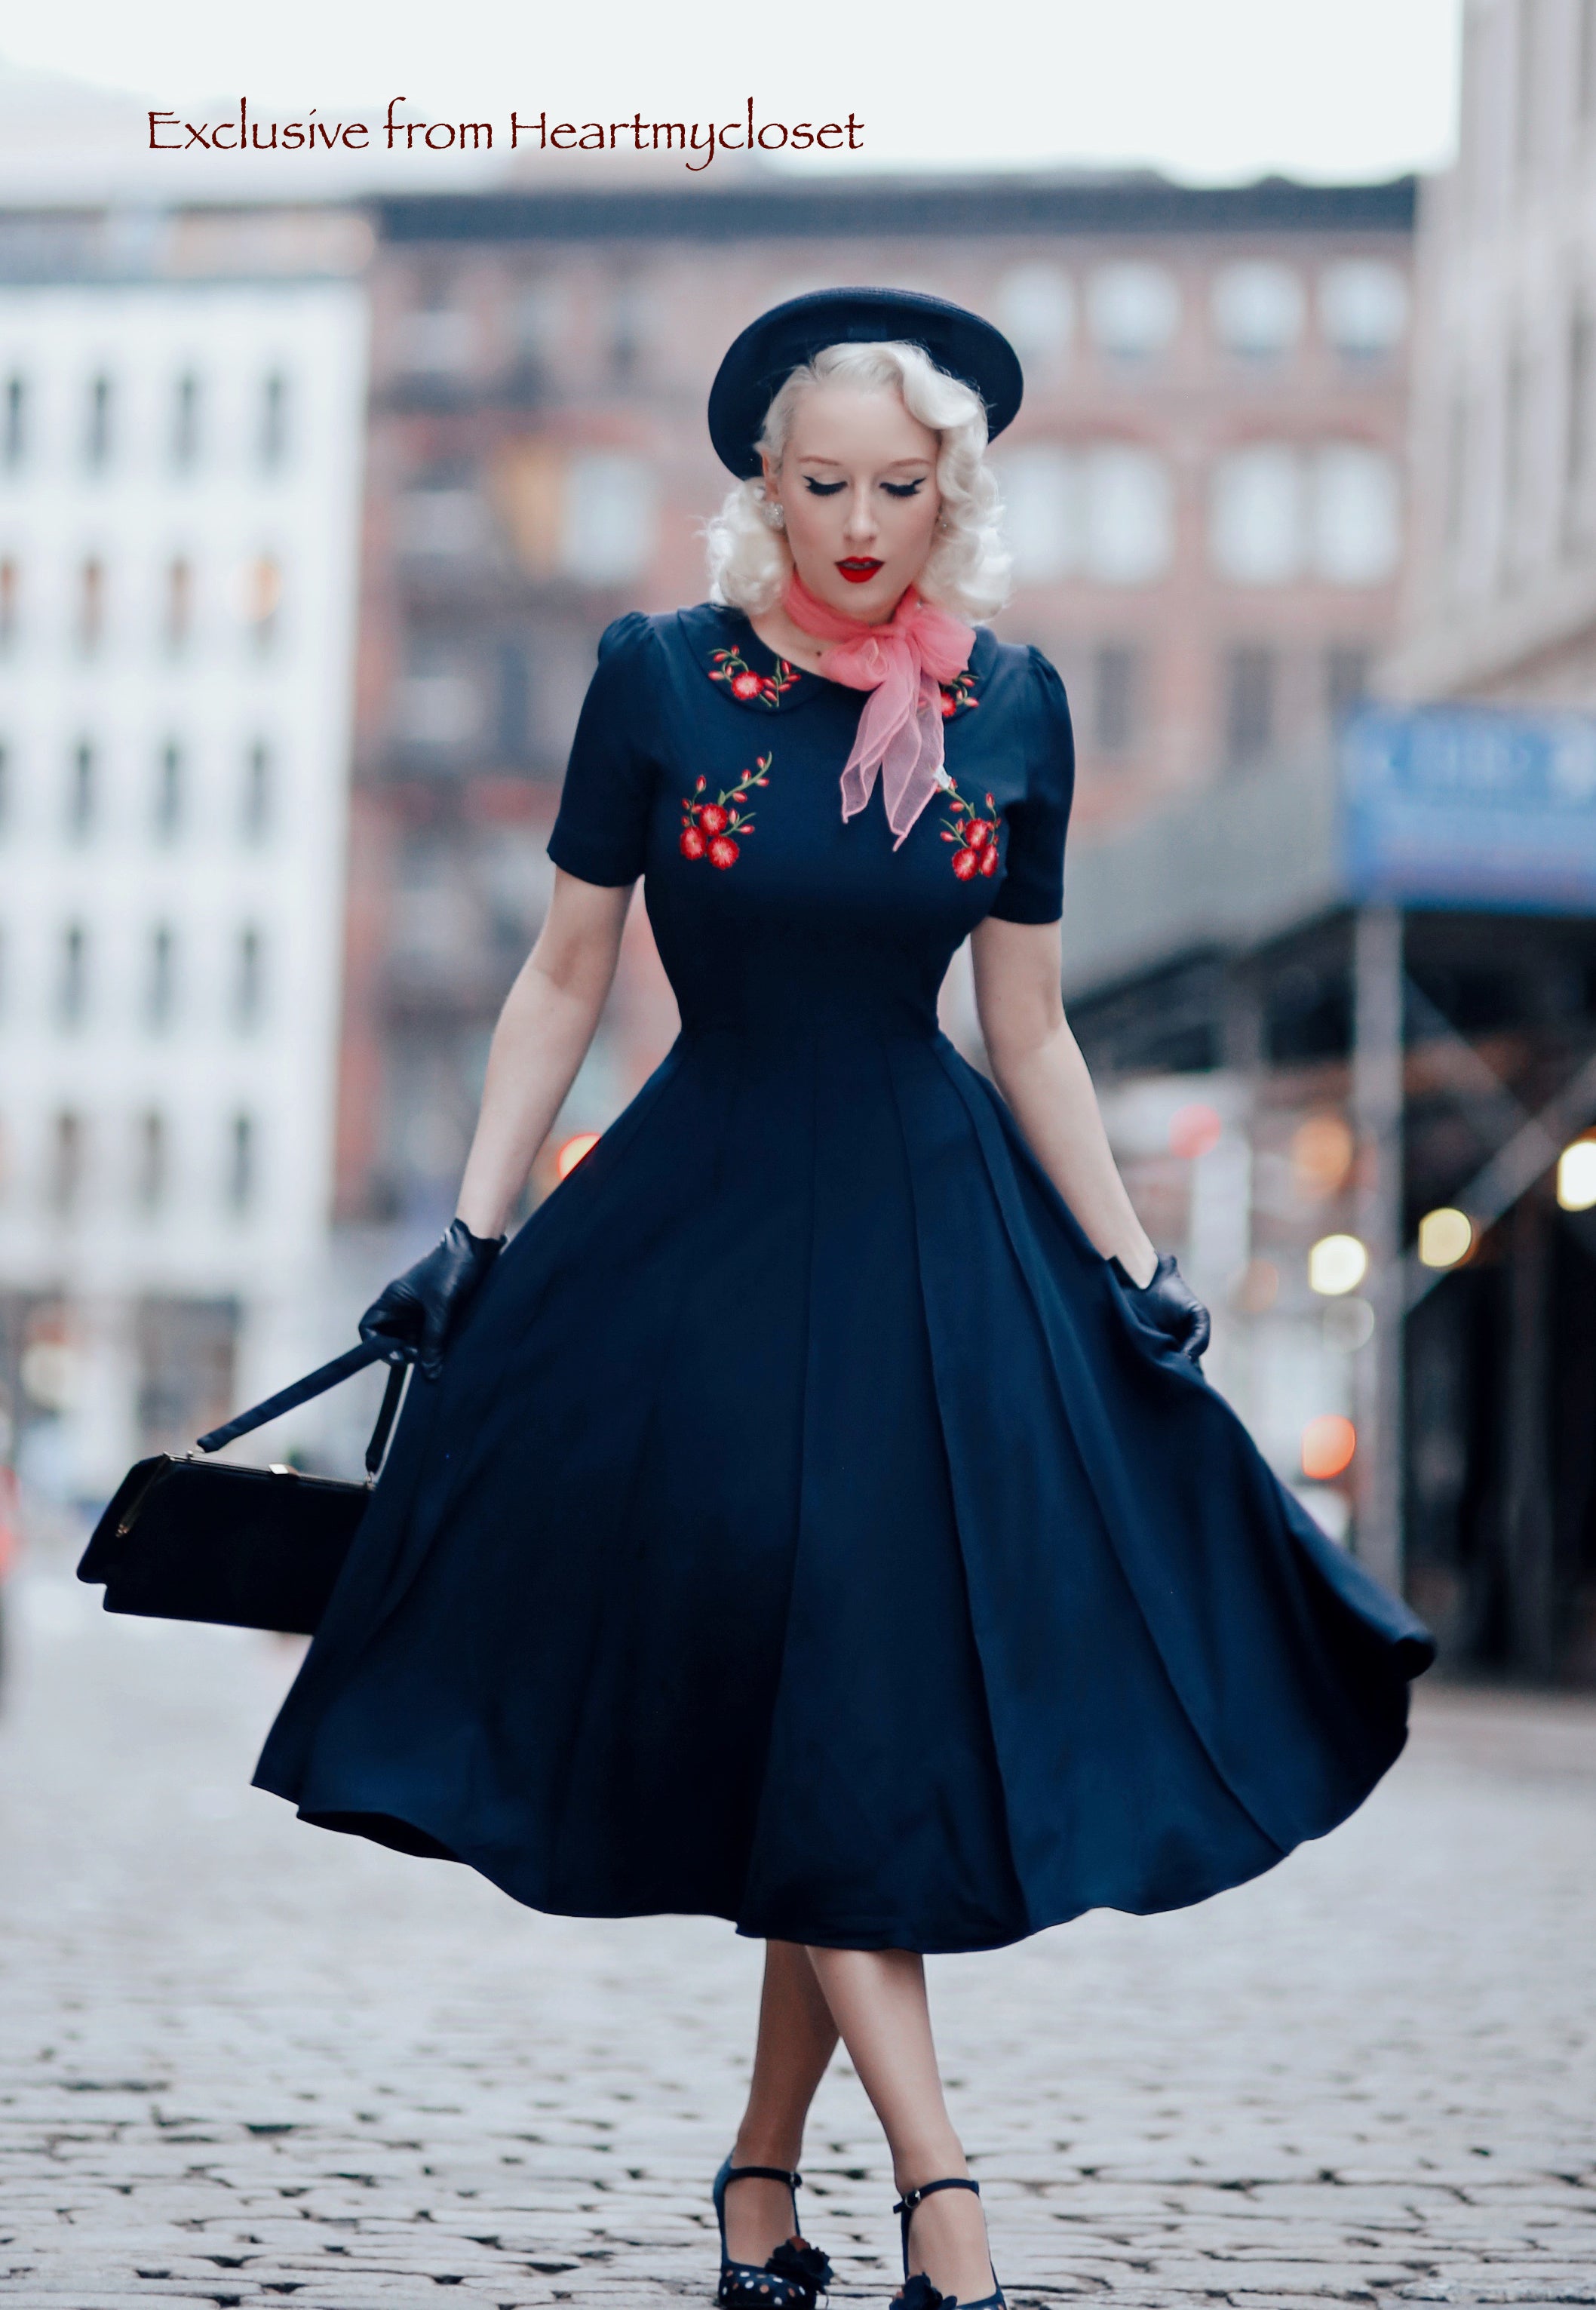 Fiona - Stunning Embroidered Vintage Dress | HeartMyCloset – heartmycloset